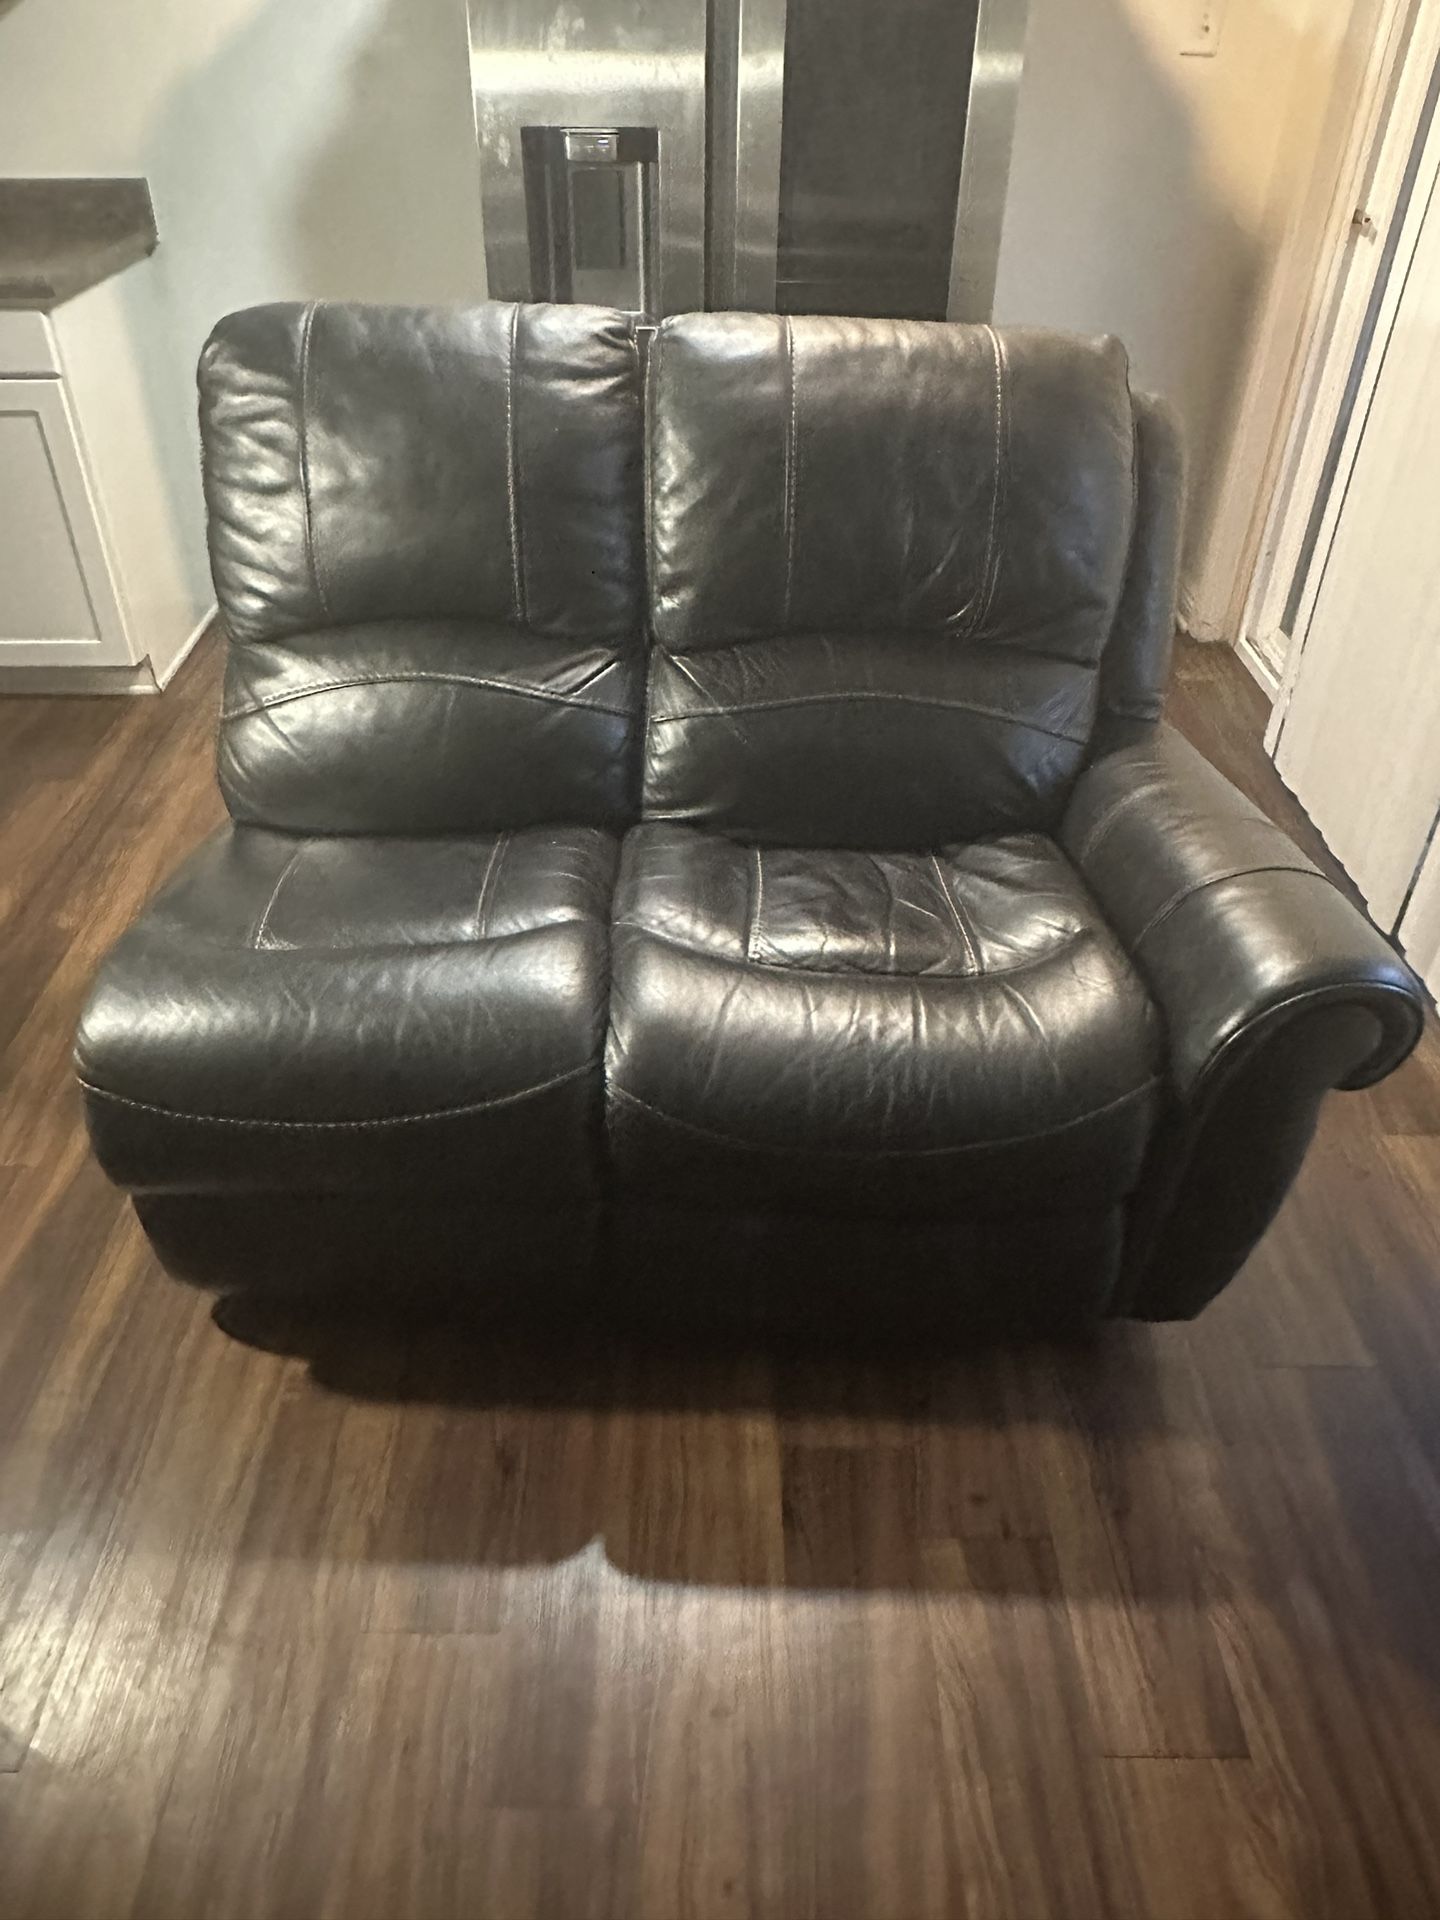 4 Piece Recliner Leather Sofa Set “best Offer”